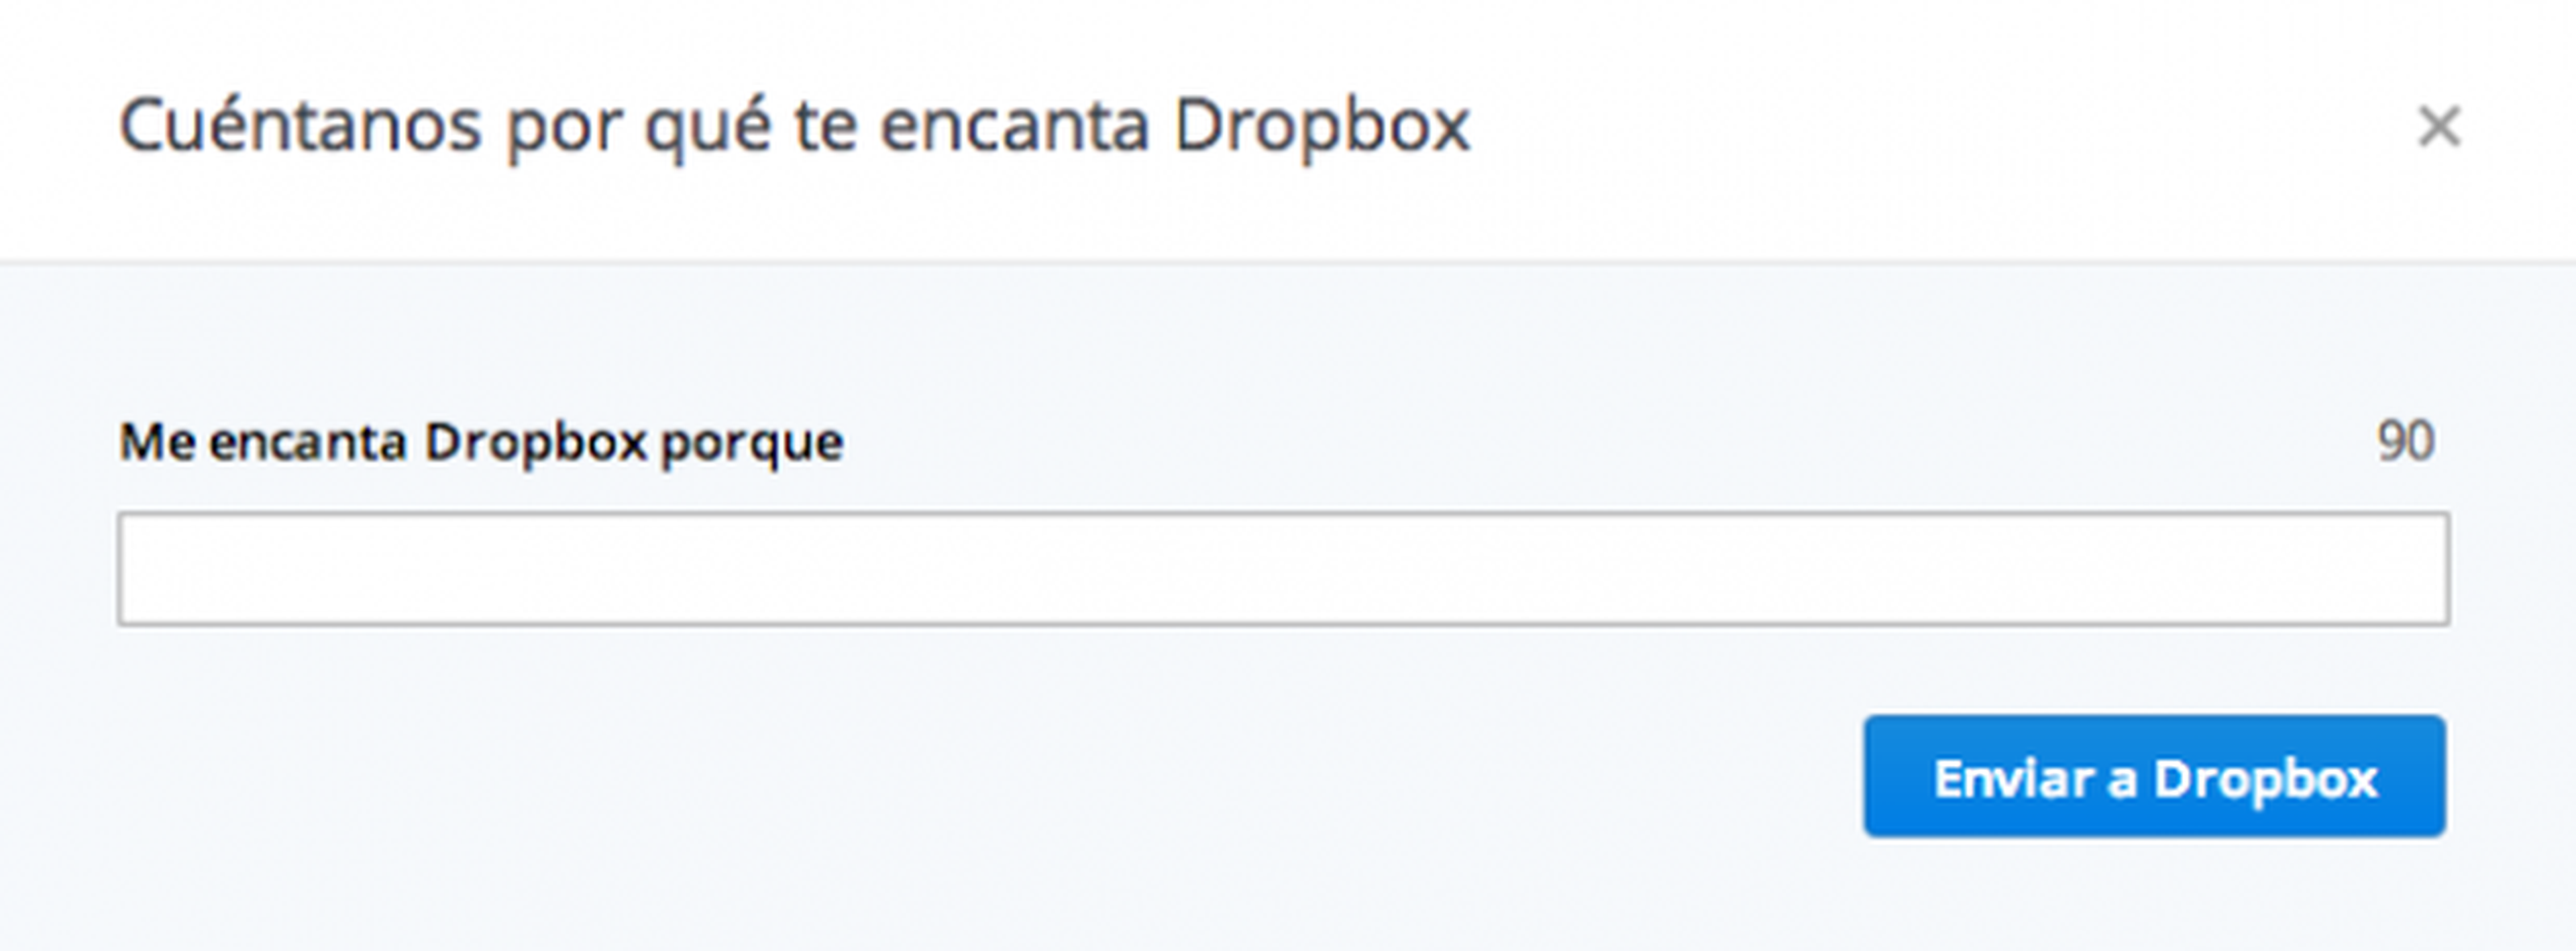 Opinión Dropbox